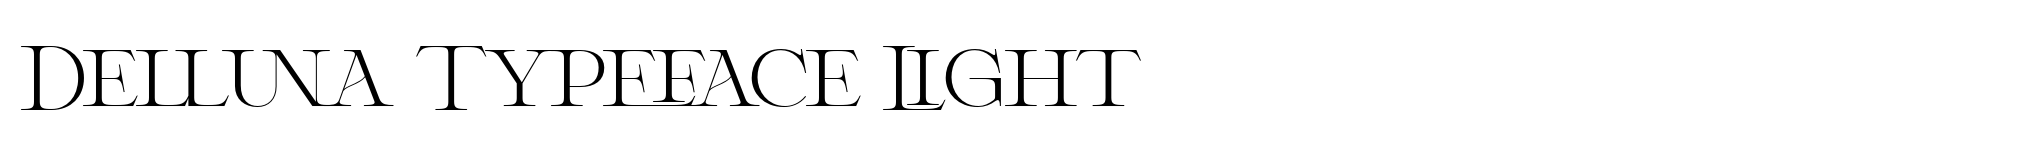 Delluna Typeface Light image